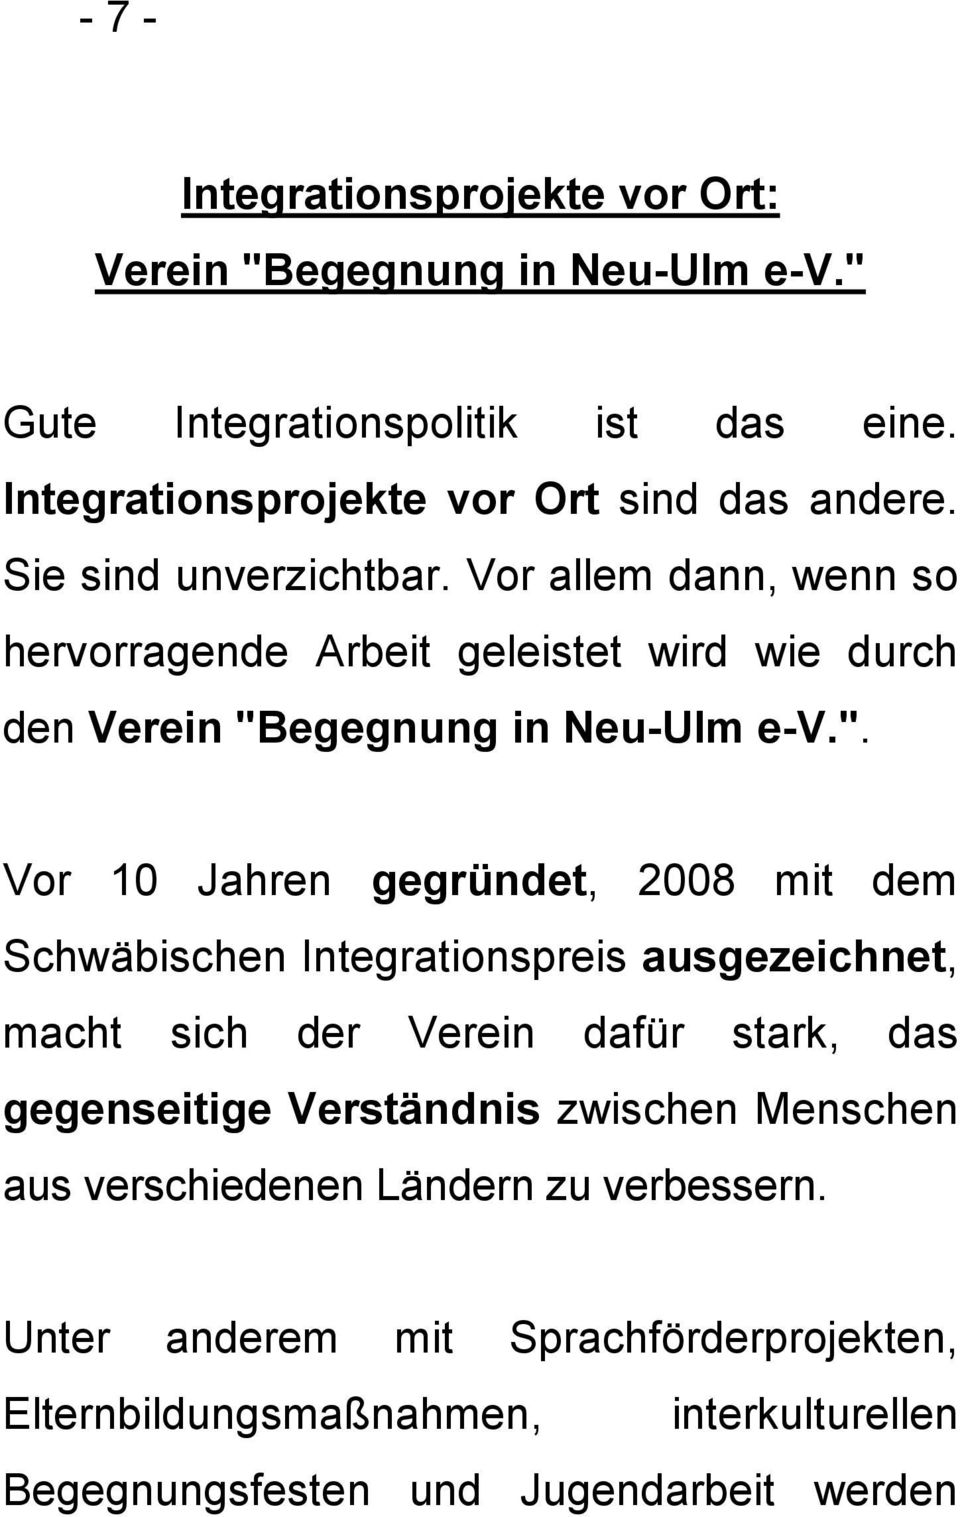 egegnung in Neu-Ulm e-v.".